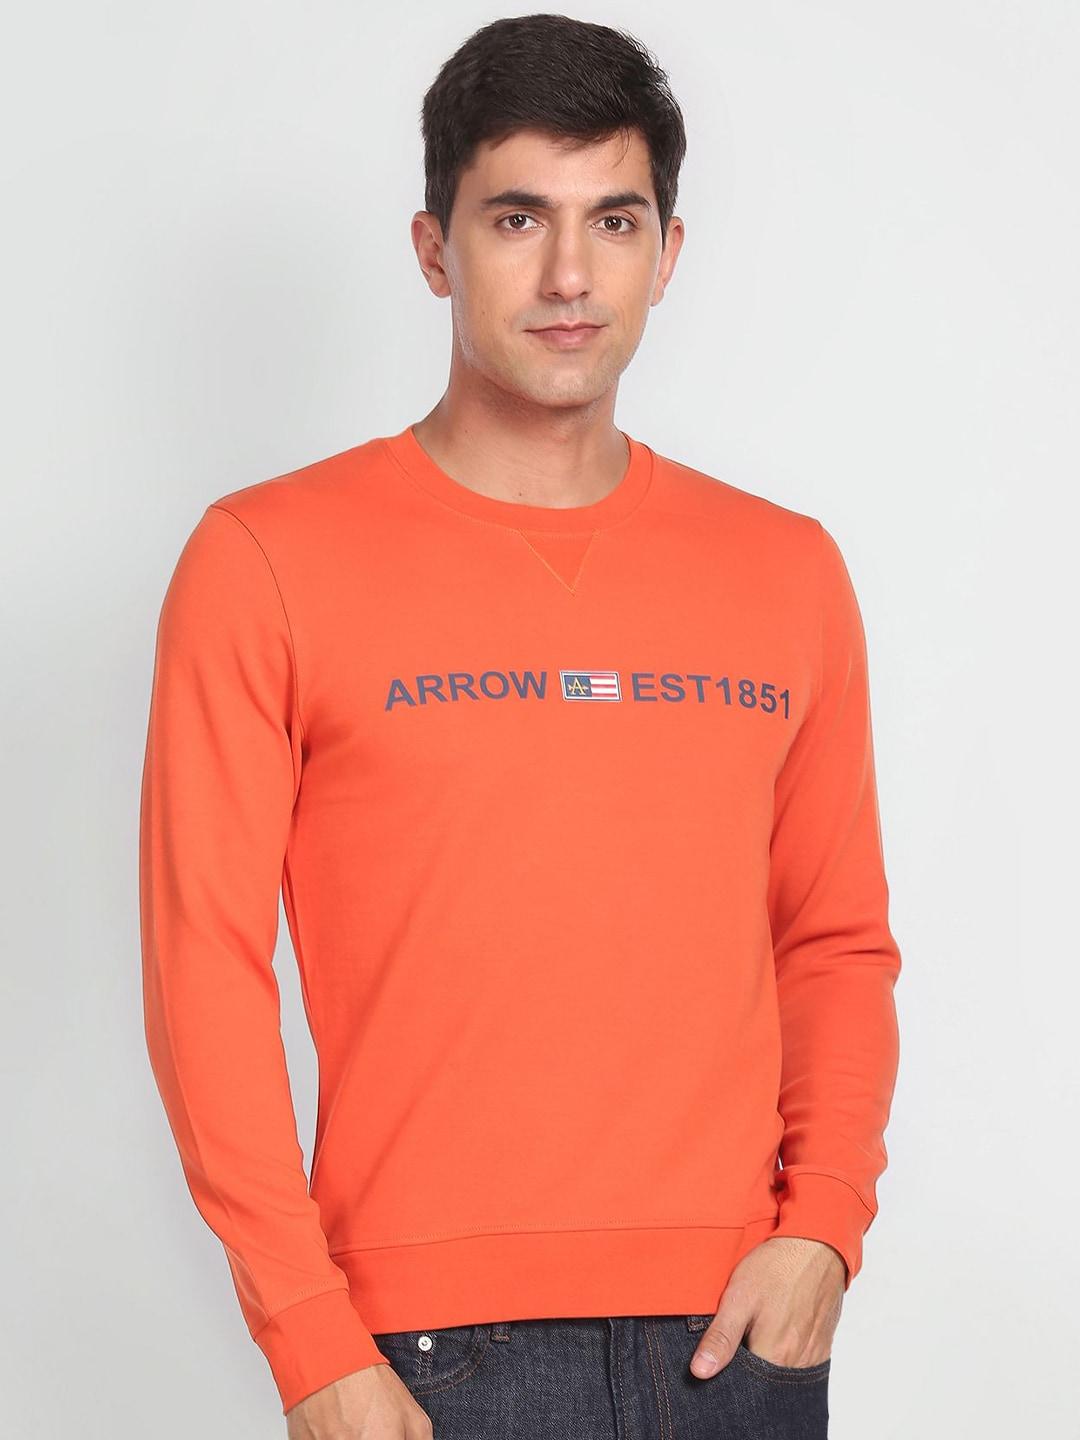 Arrow Sport Typography Printed Sweatshirt